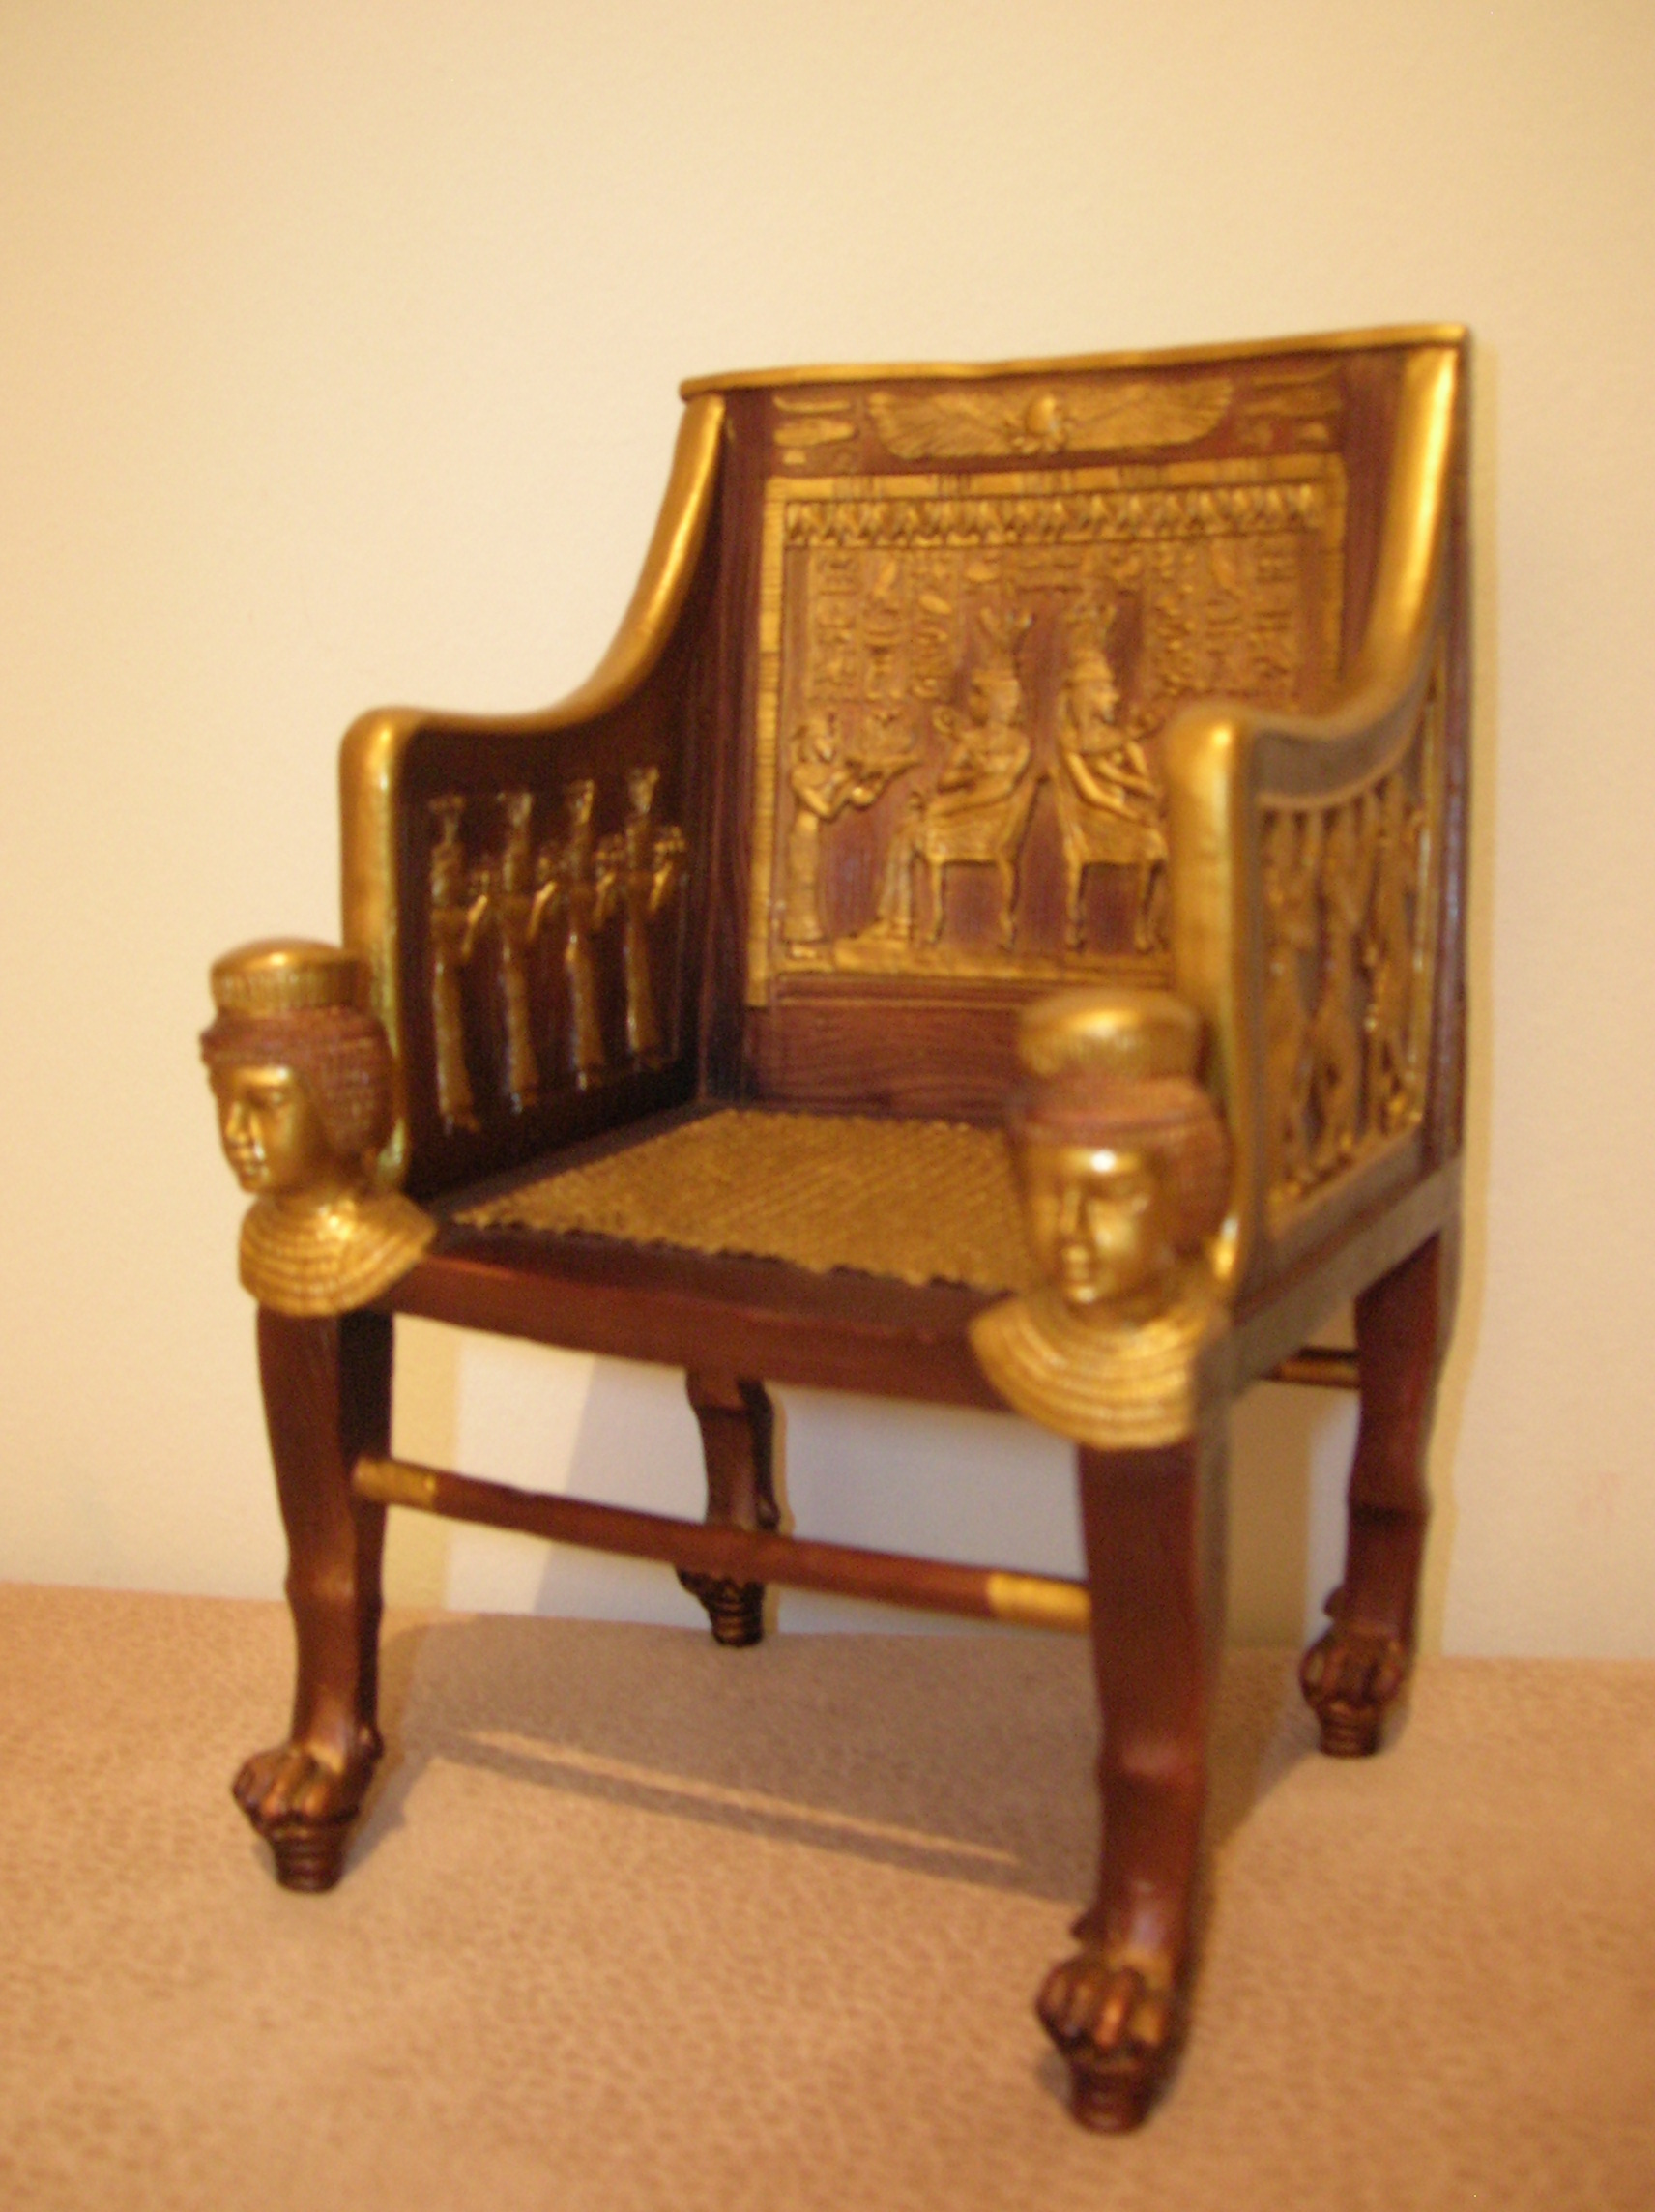 File:Sitamun chair replica 1.jpg - Wikimedia Commons